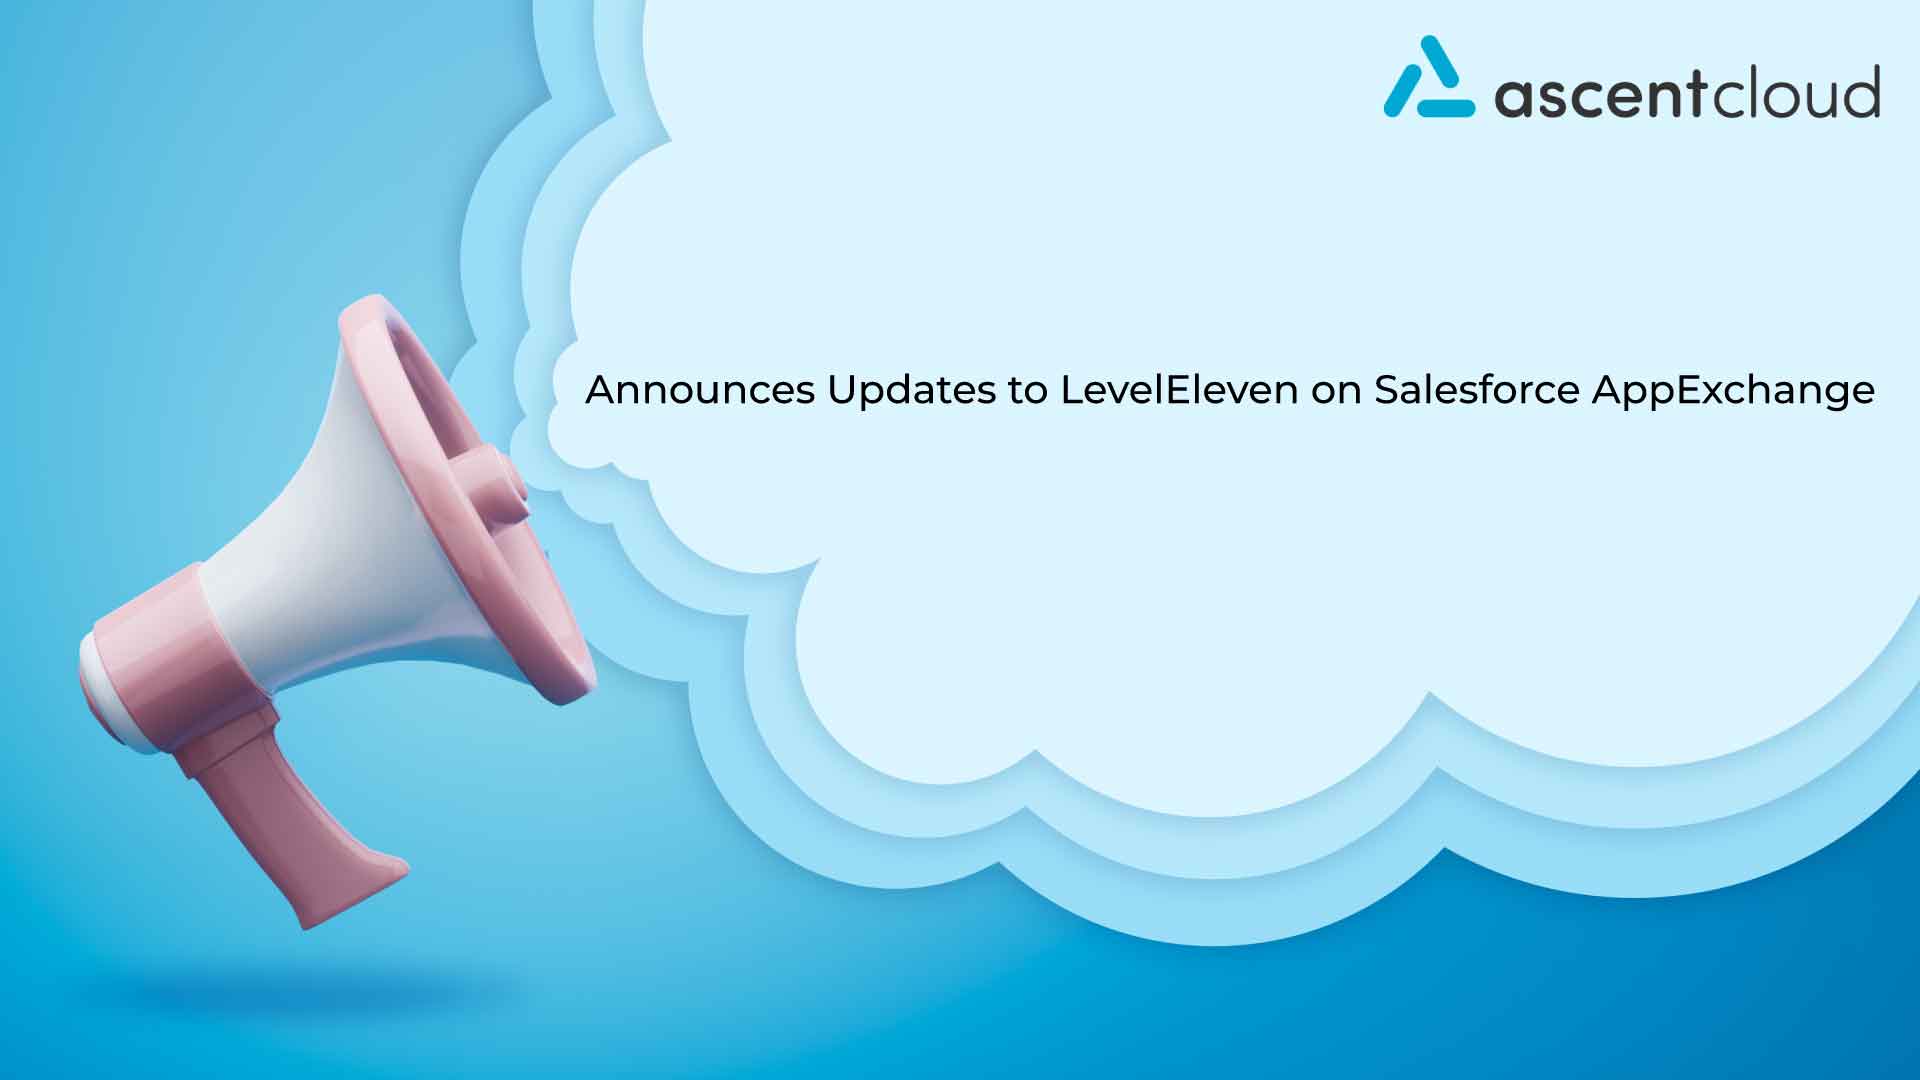 Ascent Cloud Announces Updates to LevelEleven on Salesforce AppExchange, the World's Leading Enterprise Cloud Marketplace